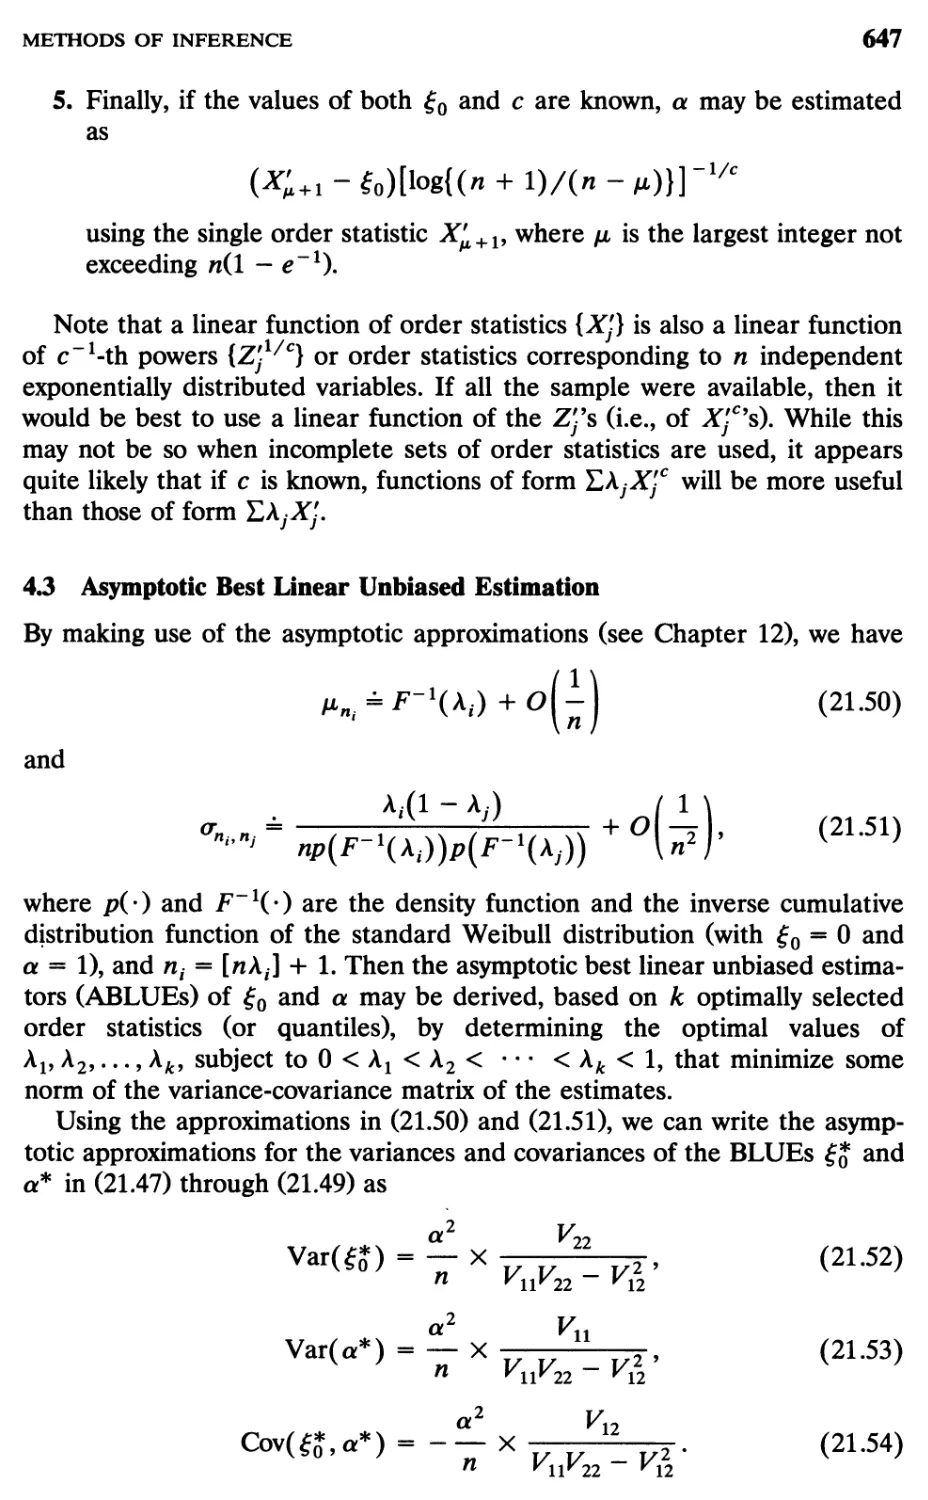 4.3 Asymptotic Best Linear Unbiased Estimation, 647